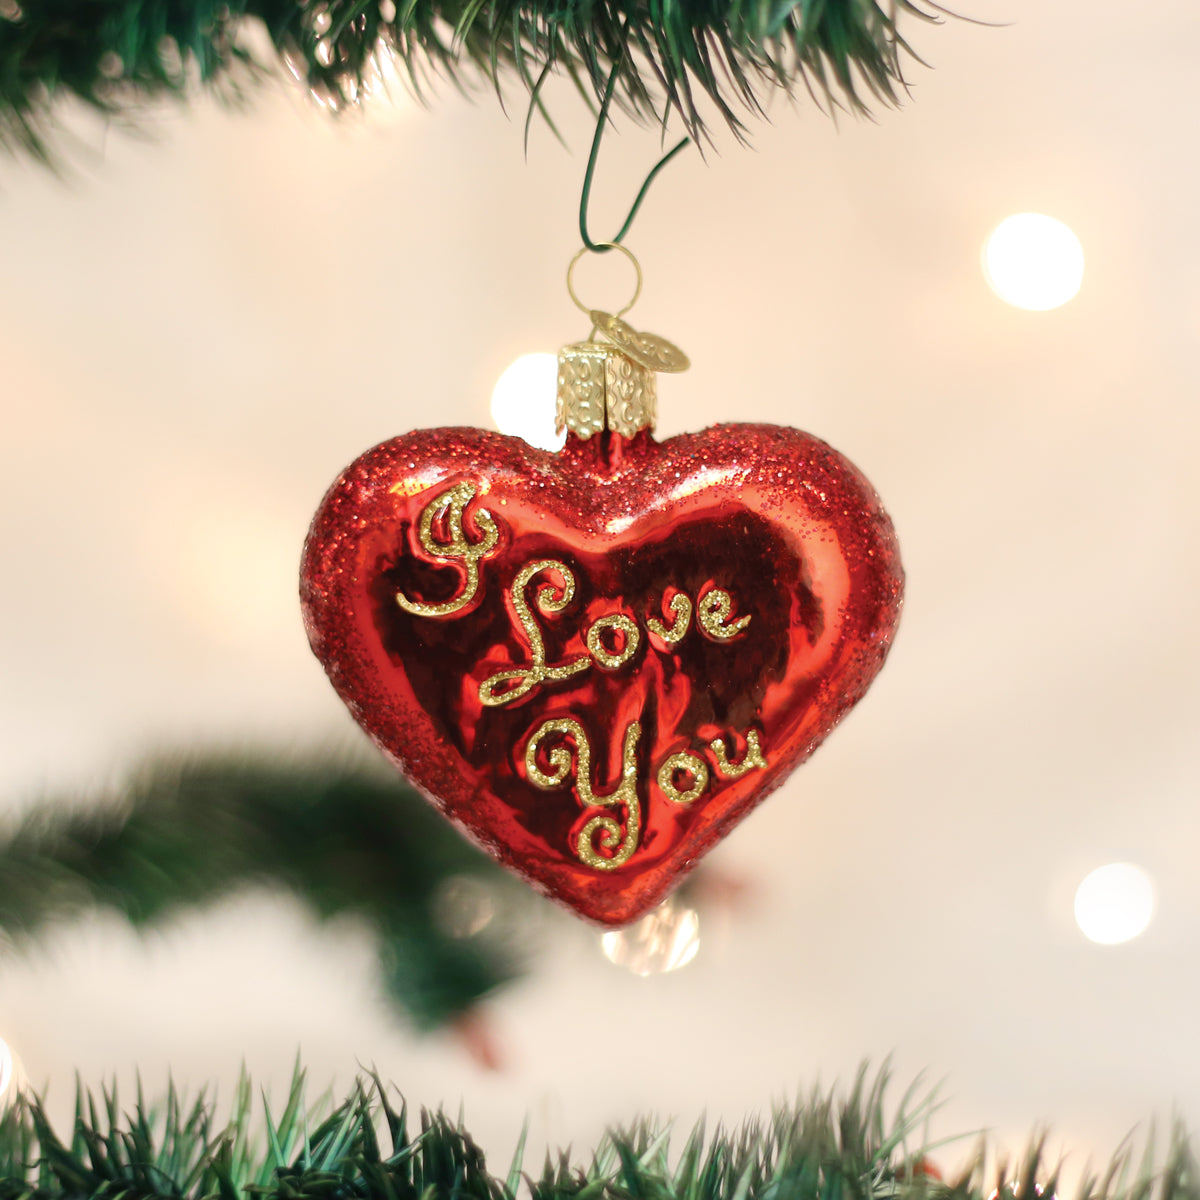 Old World Christmas I Love You Heart Glass Ornament